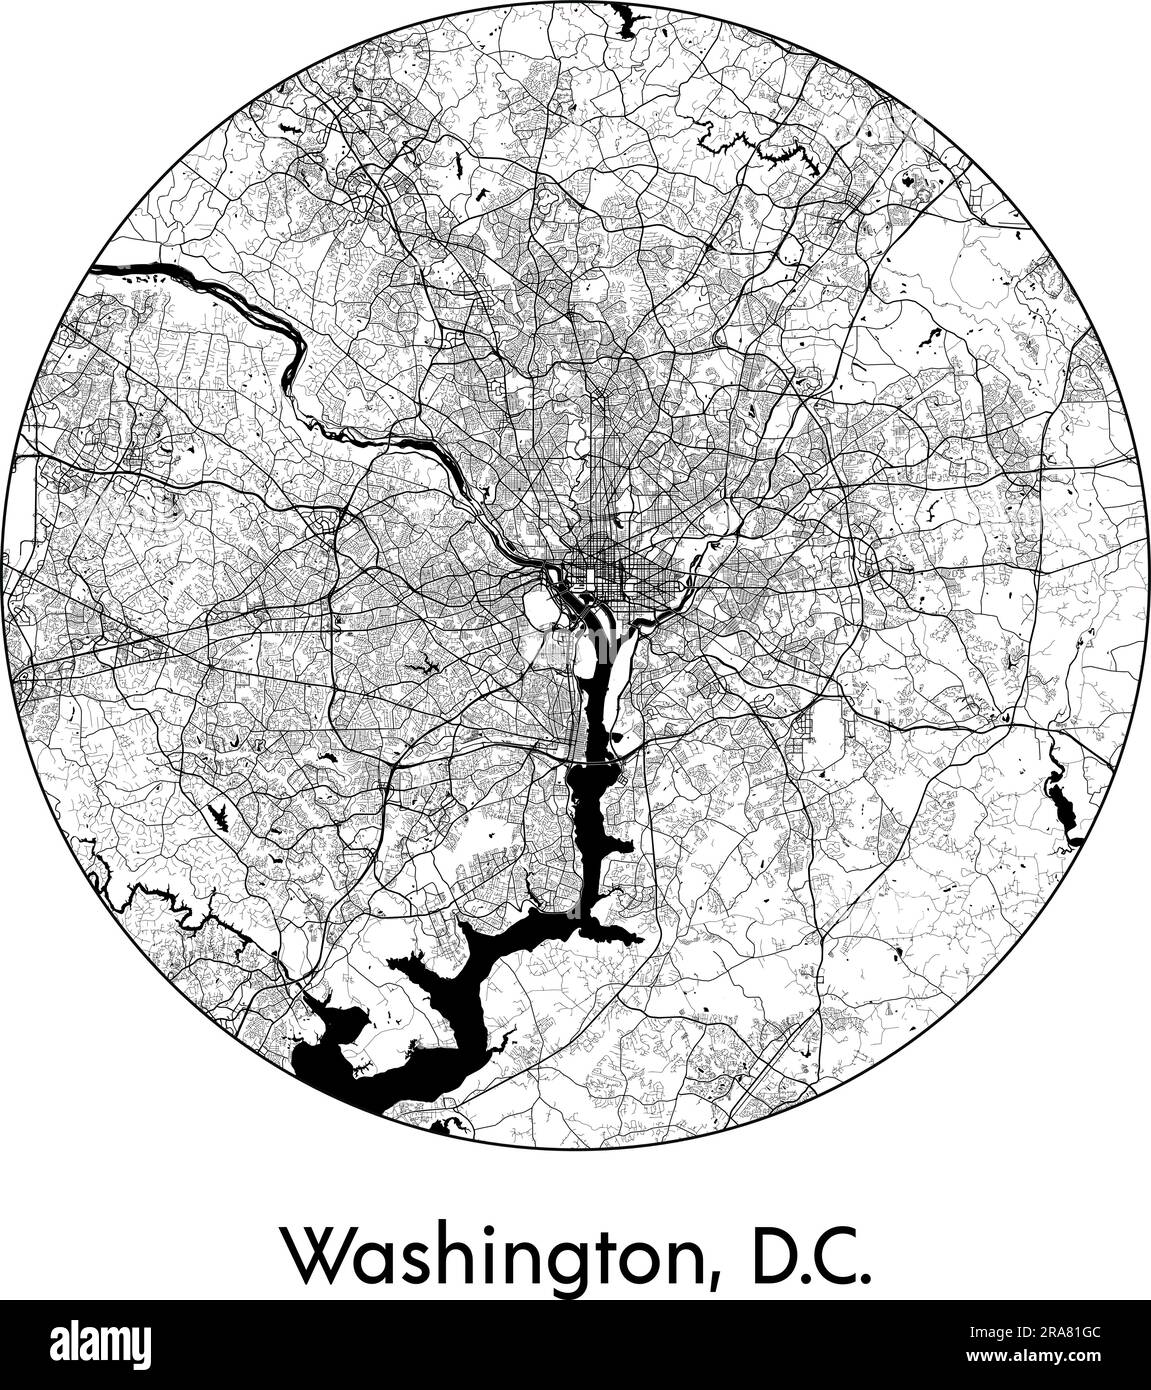 Stadtplan Washington, D.C. USA Nordamerika Vektordarstellung schwarz weiß Stock Vektor